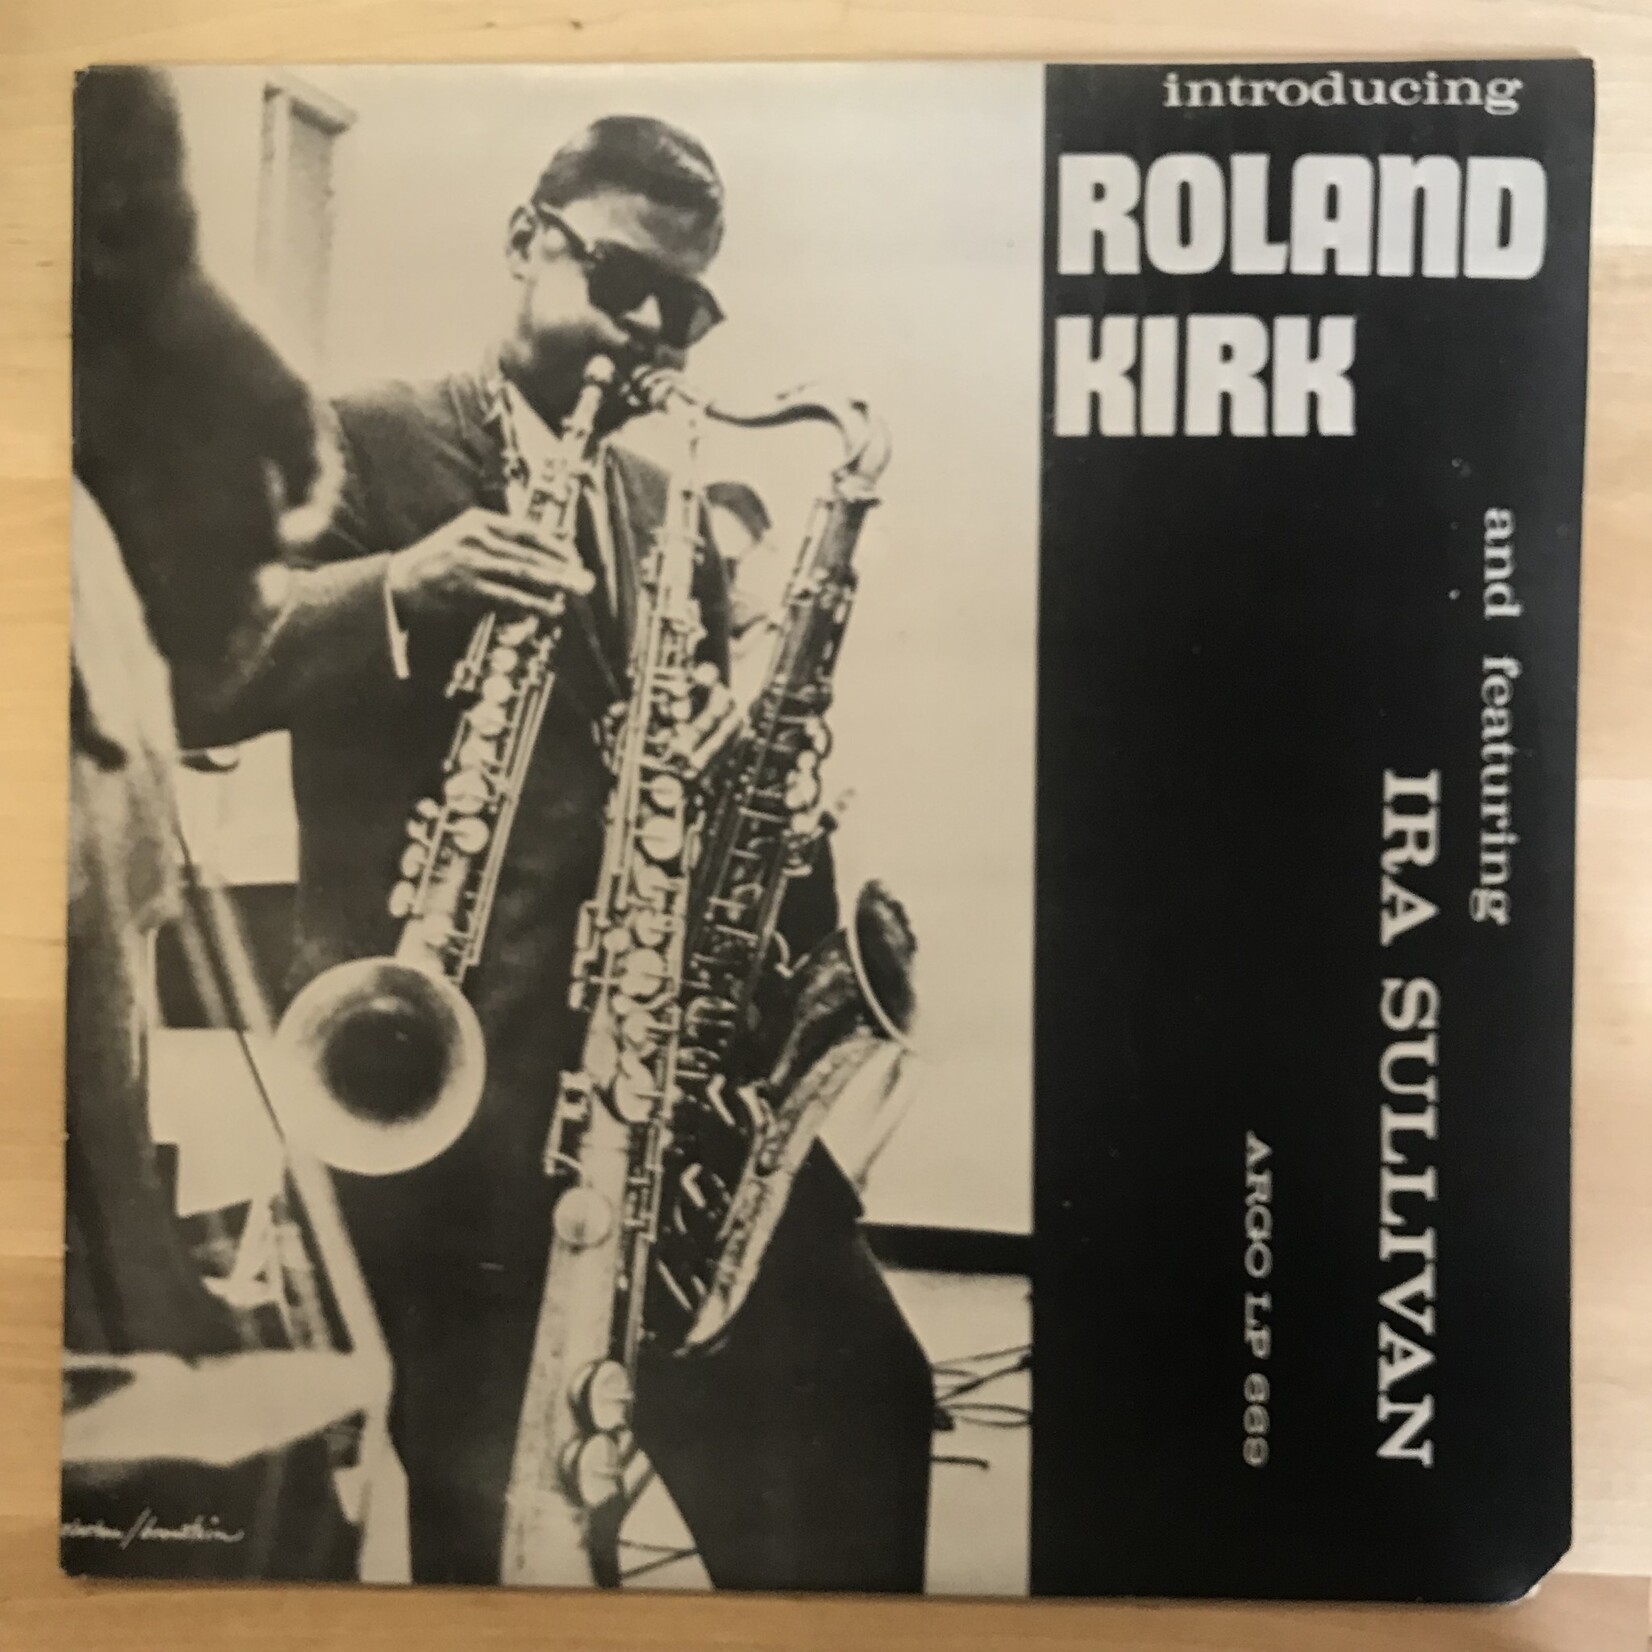 Roland Kirk - Introducing Roland Kirk - LPS669 - Vinyl LP (USED)